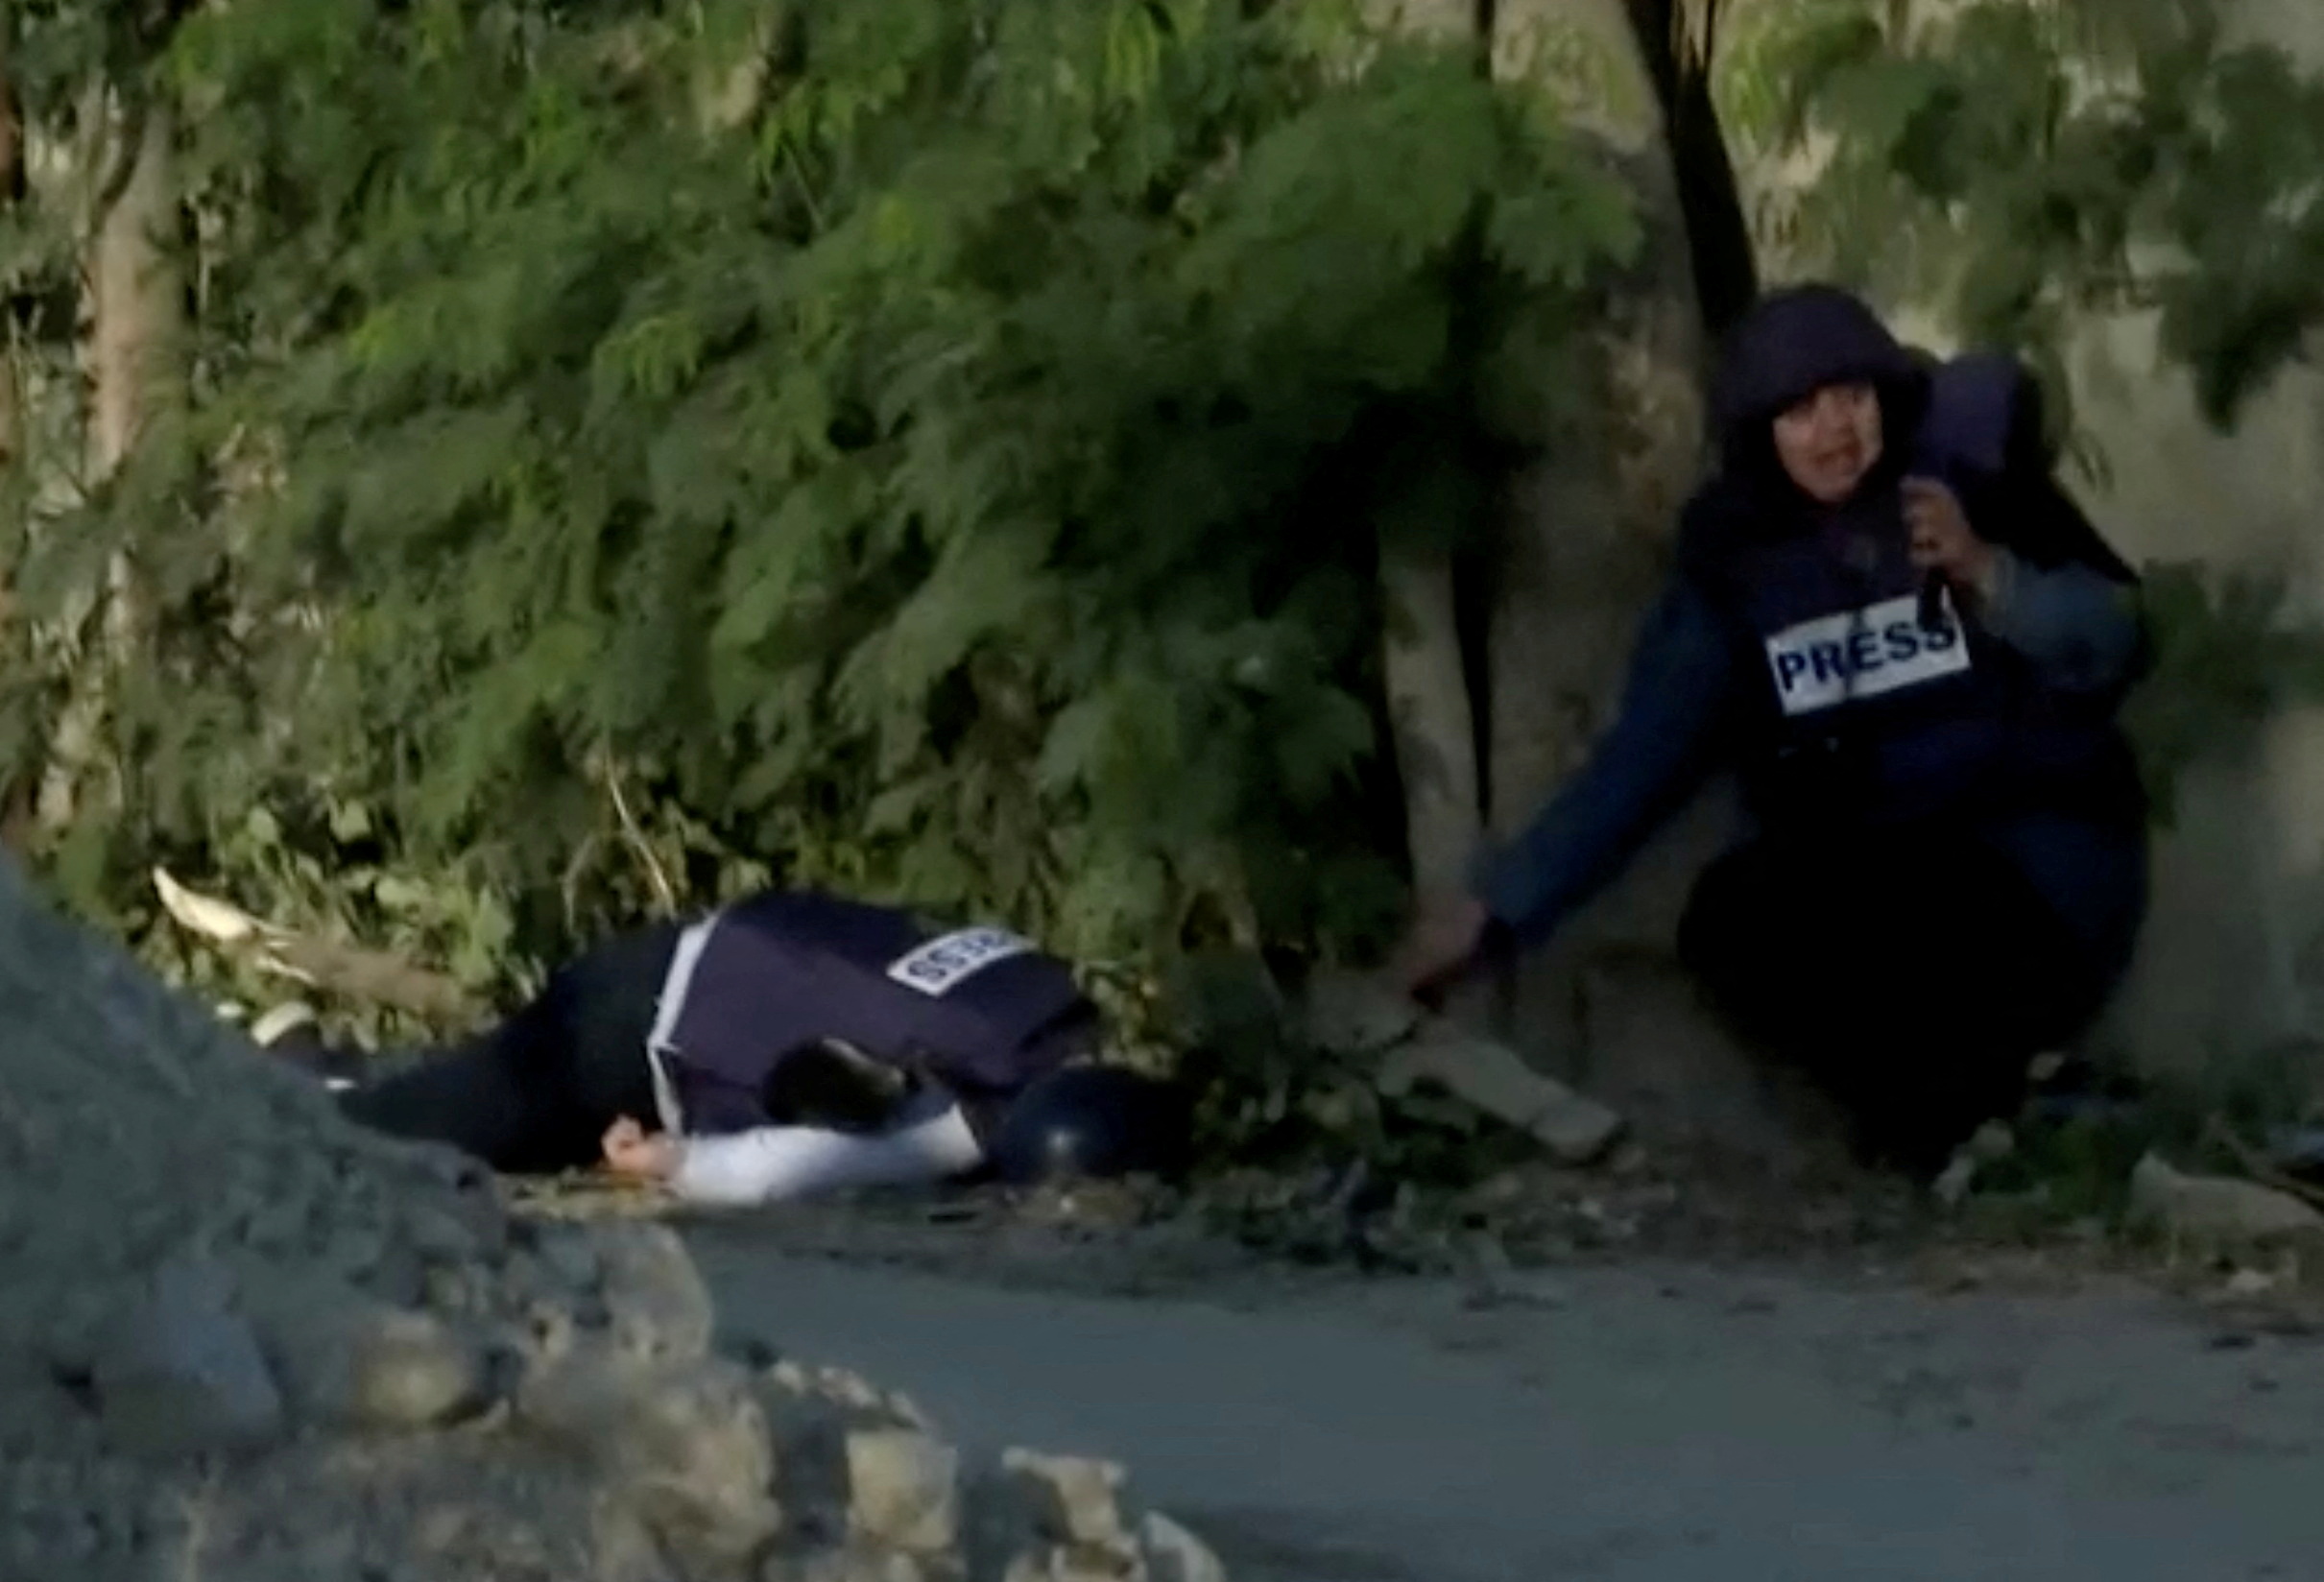 Shatha Hanaysha is seen next to the dead body of Al Jazeera journalist Shireen Abu Akleh in Jenin (Reuters)